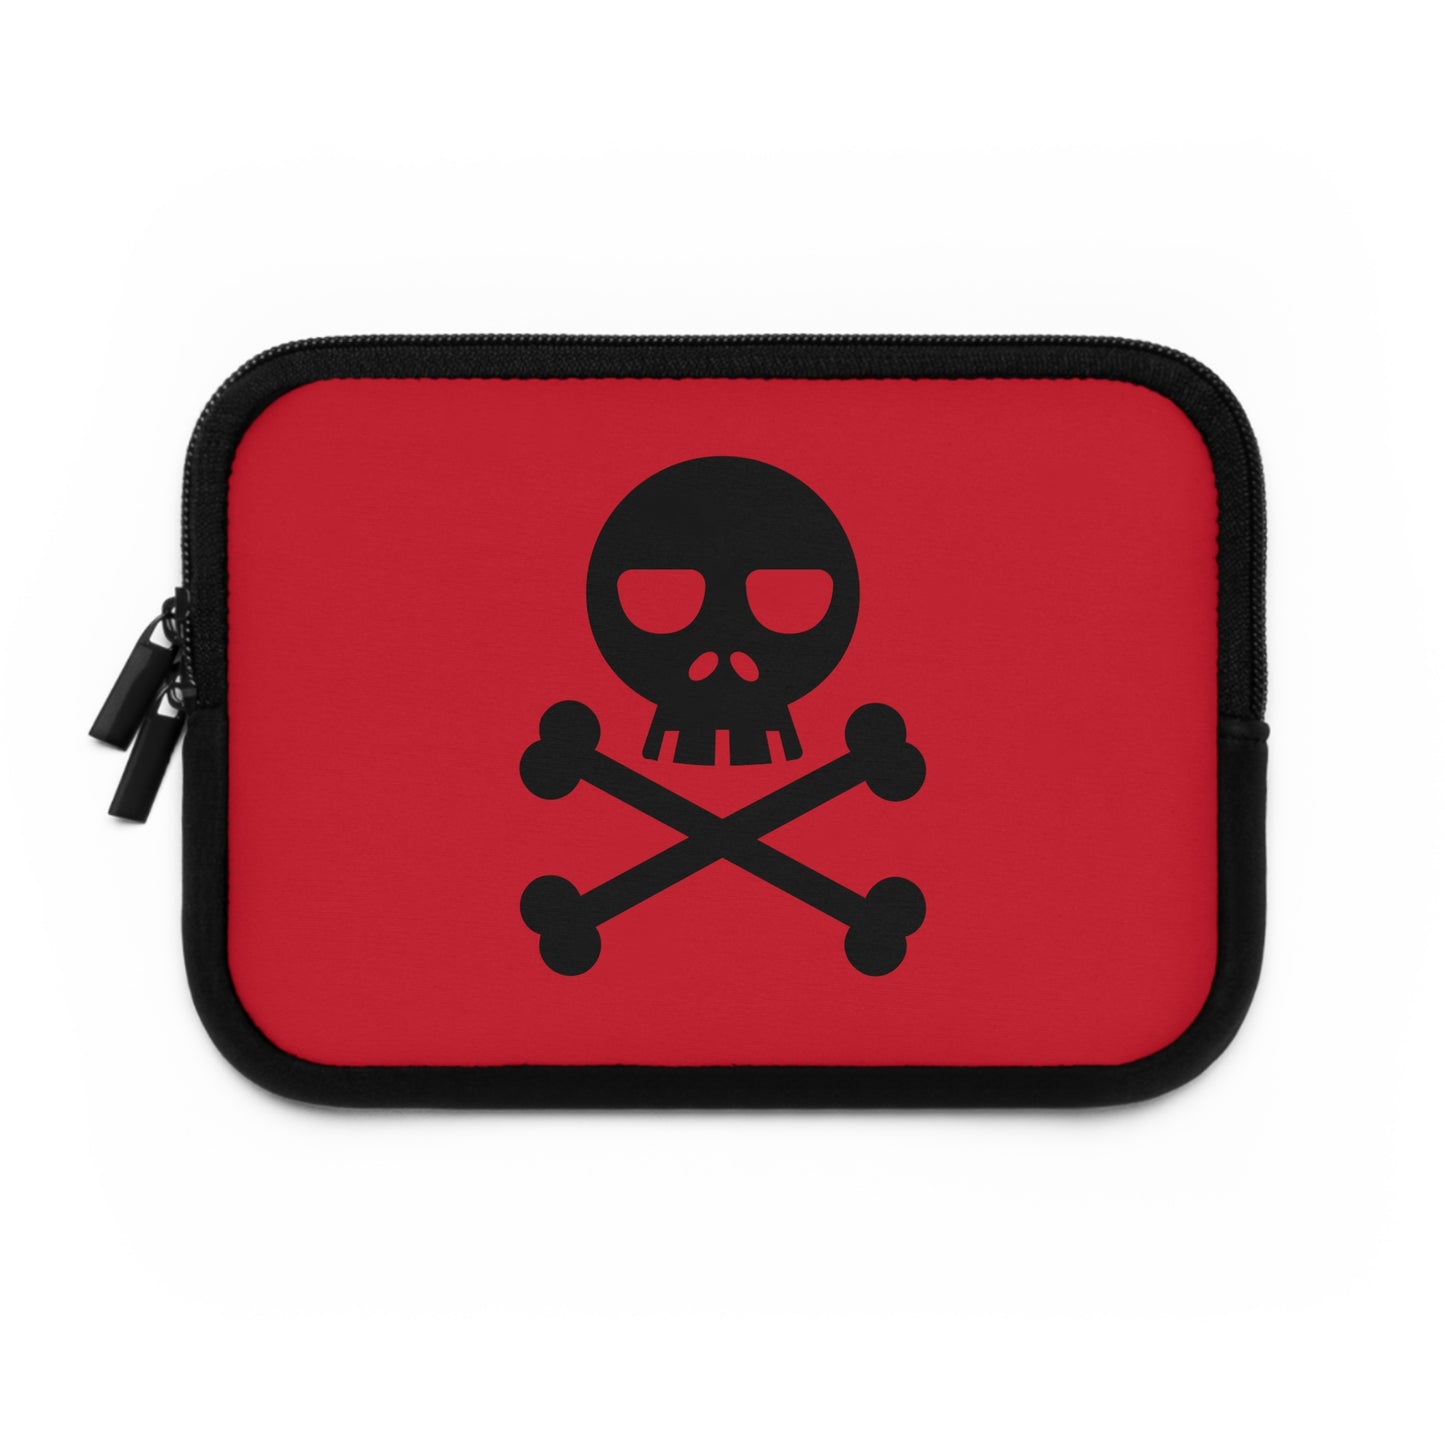 Red Skull and Crossbones Laptop Case, Punk laptop sleeve